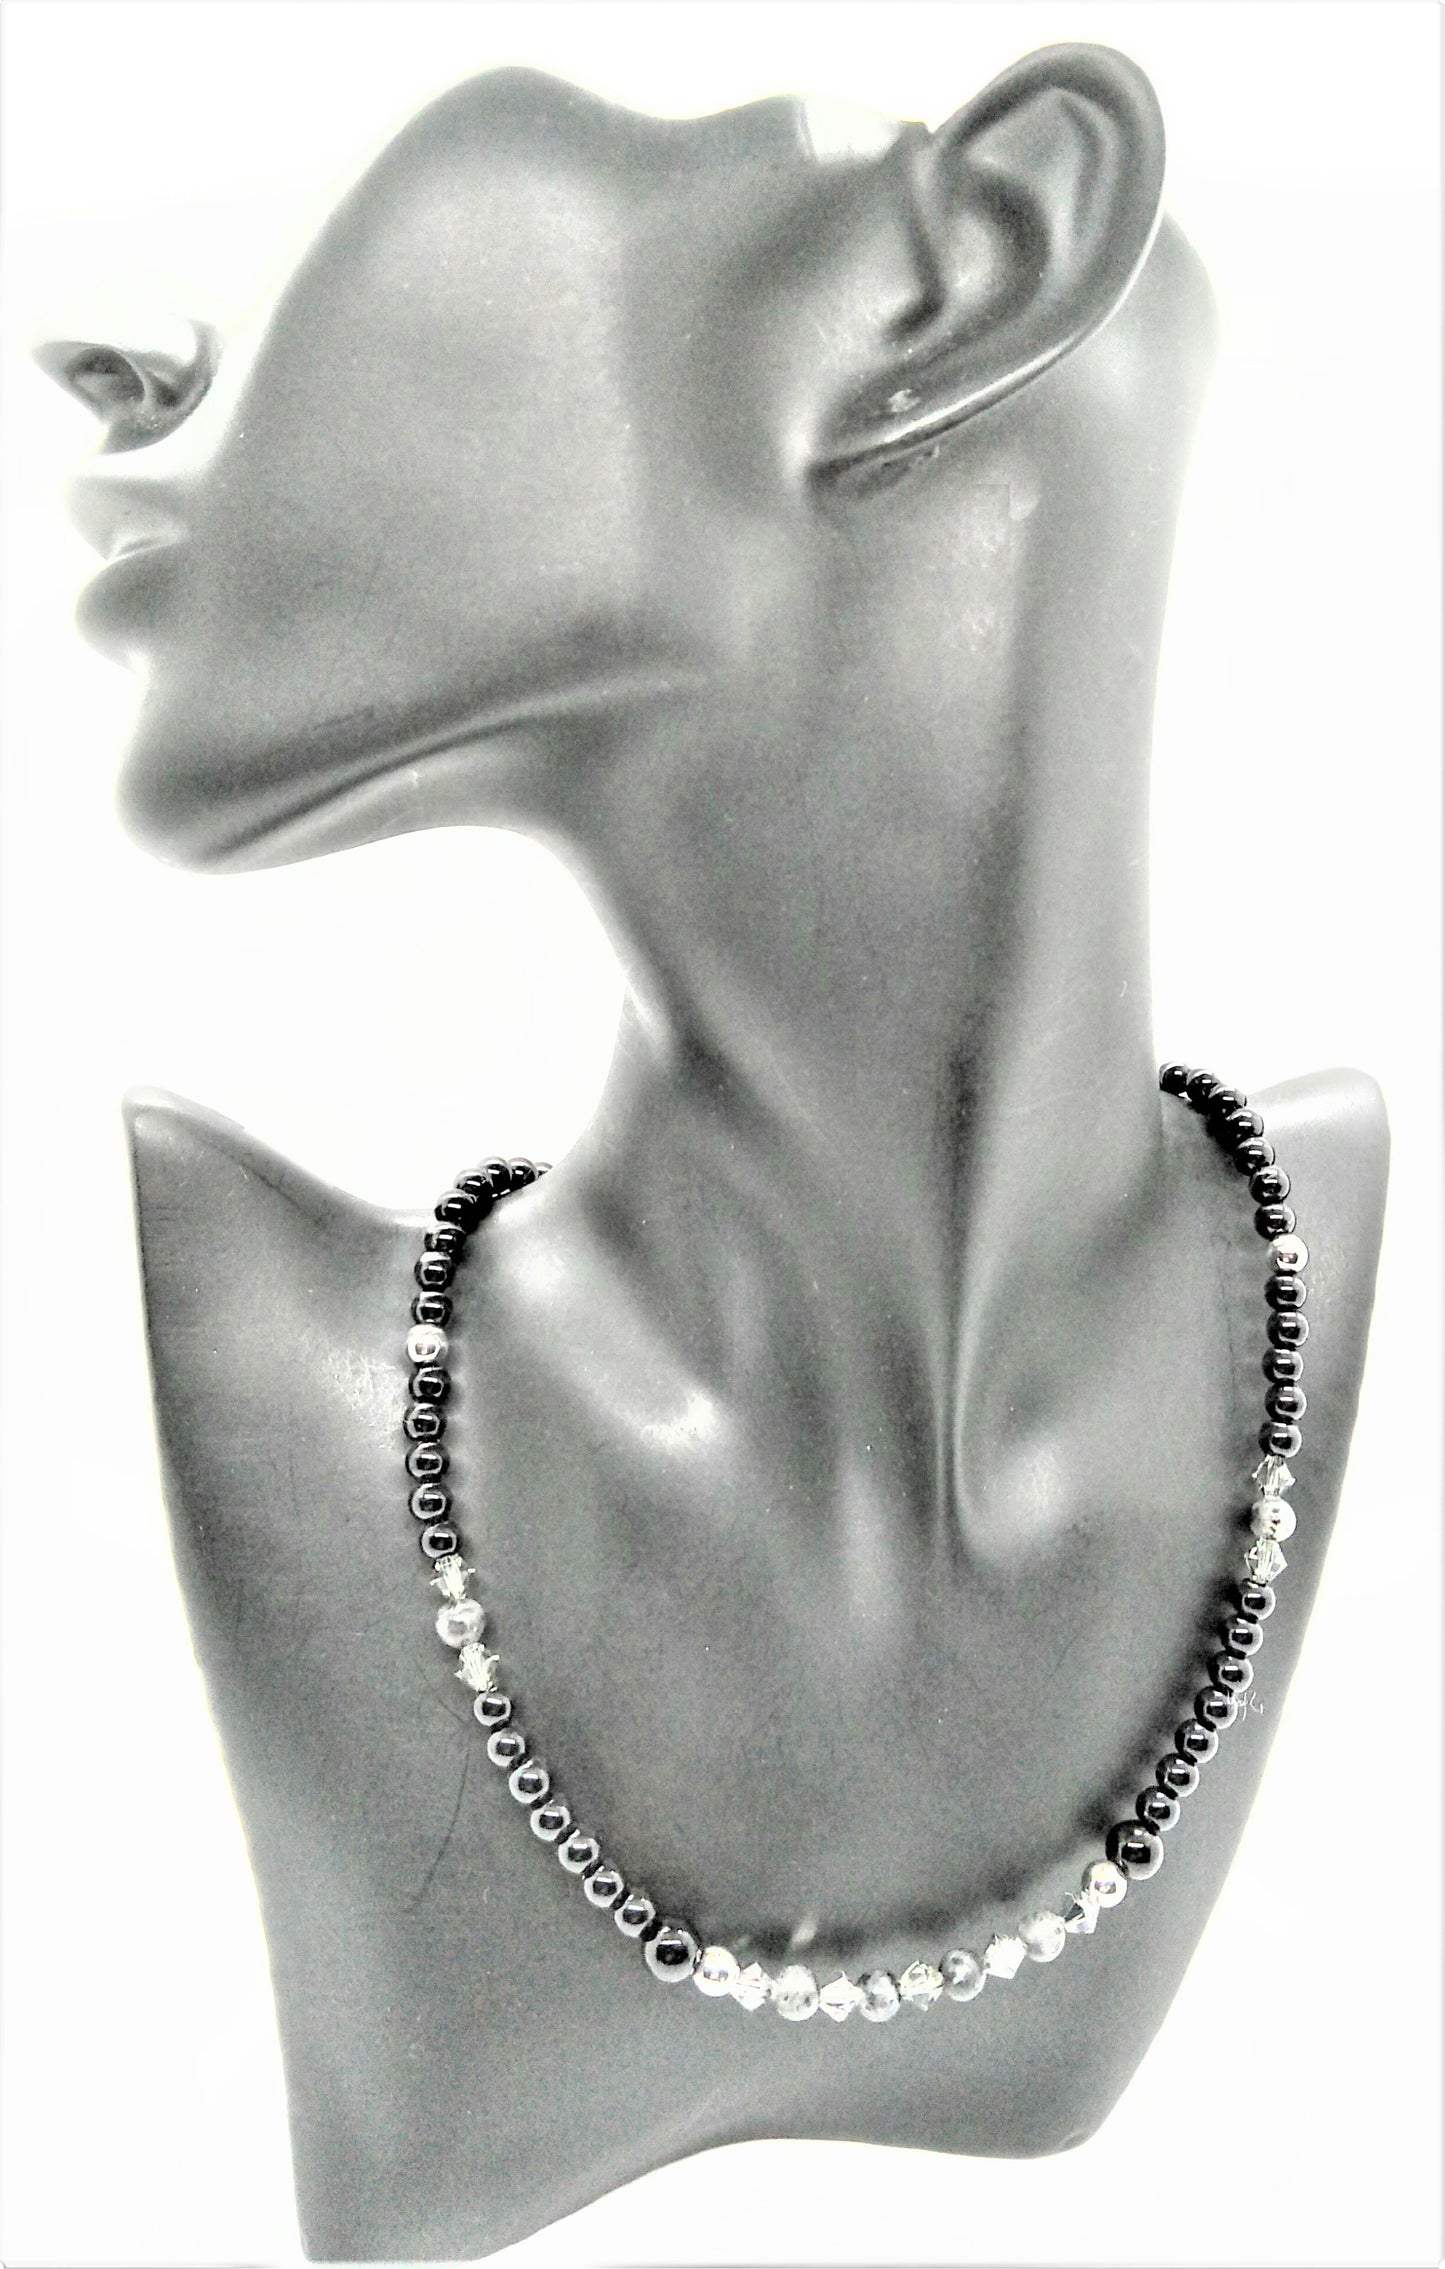 Fabulous Black & Gray Reflection - A  Necklace